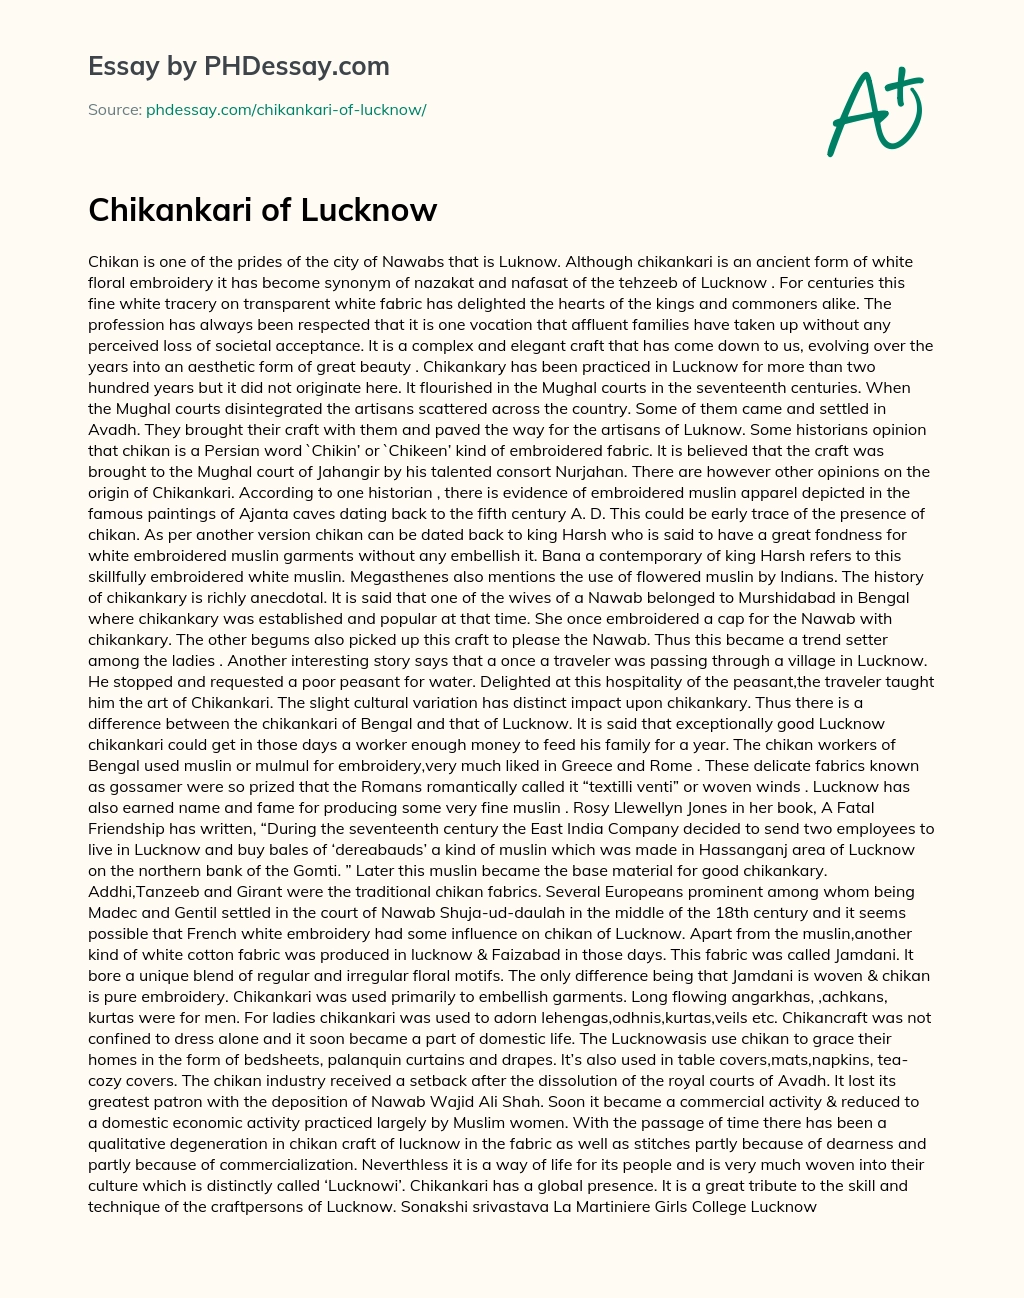 Chikankari of Lucknow essay